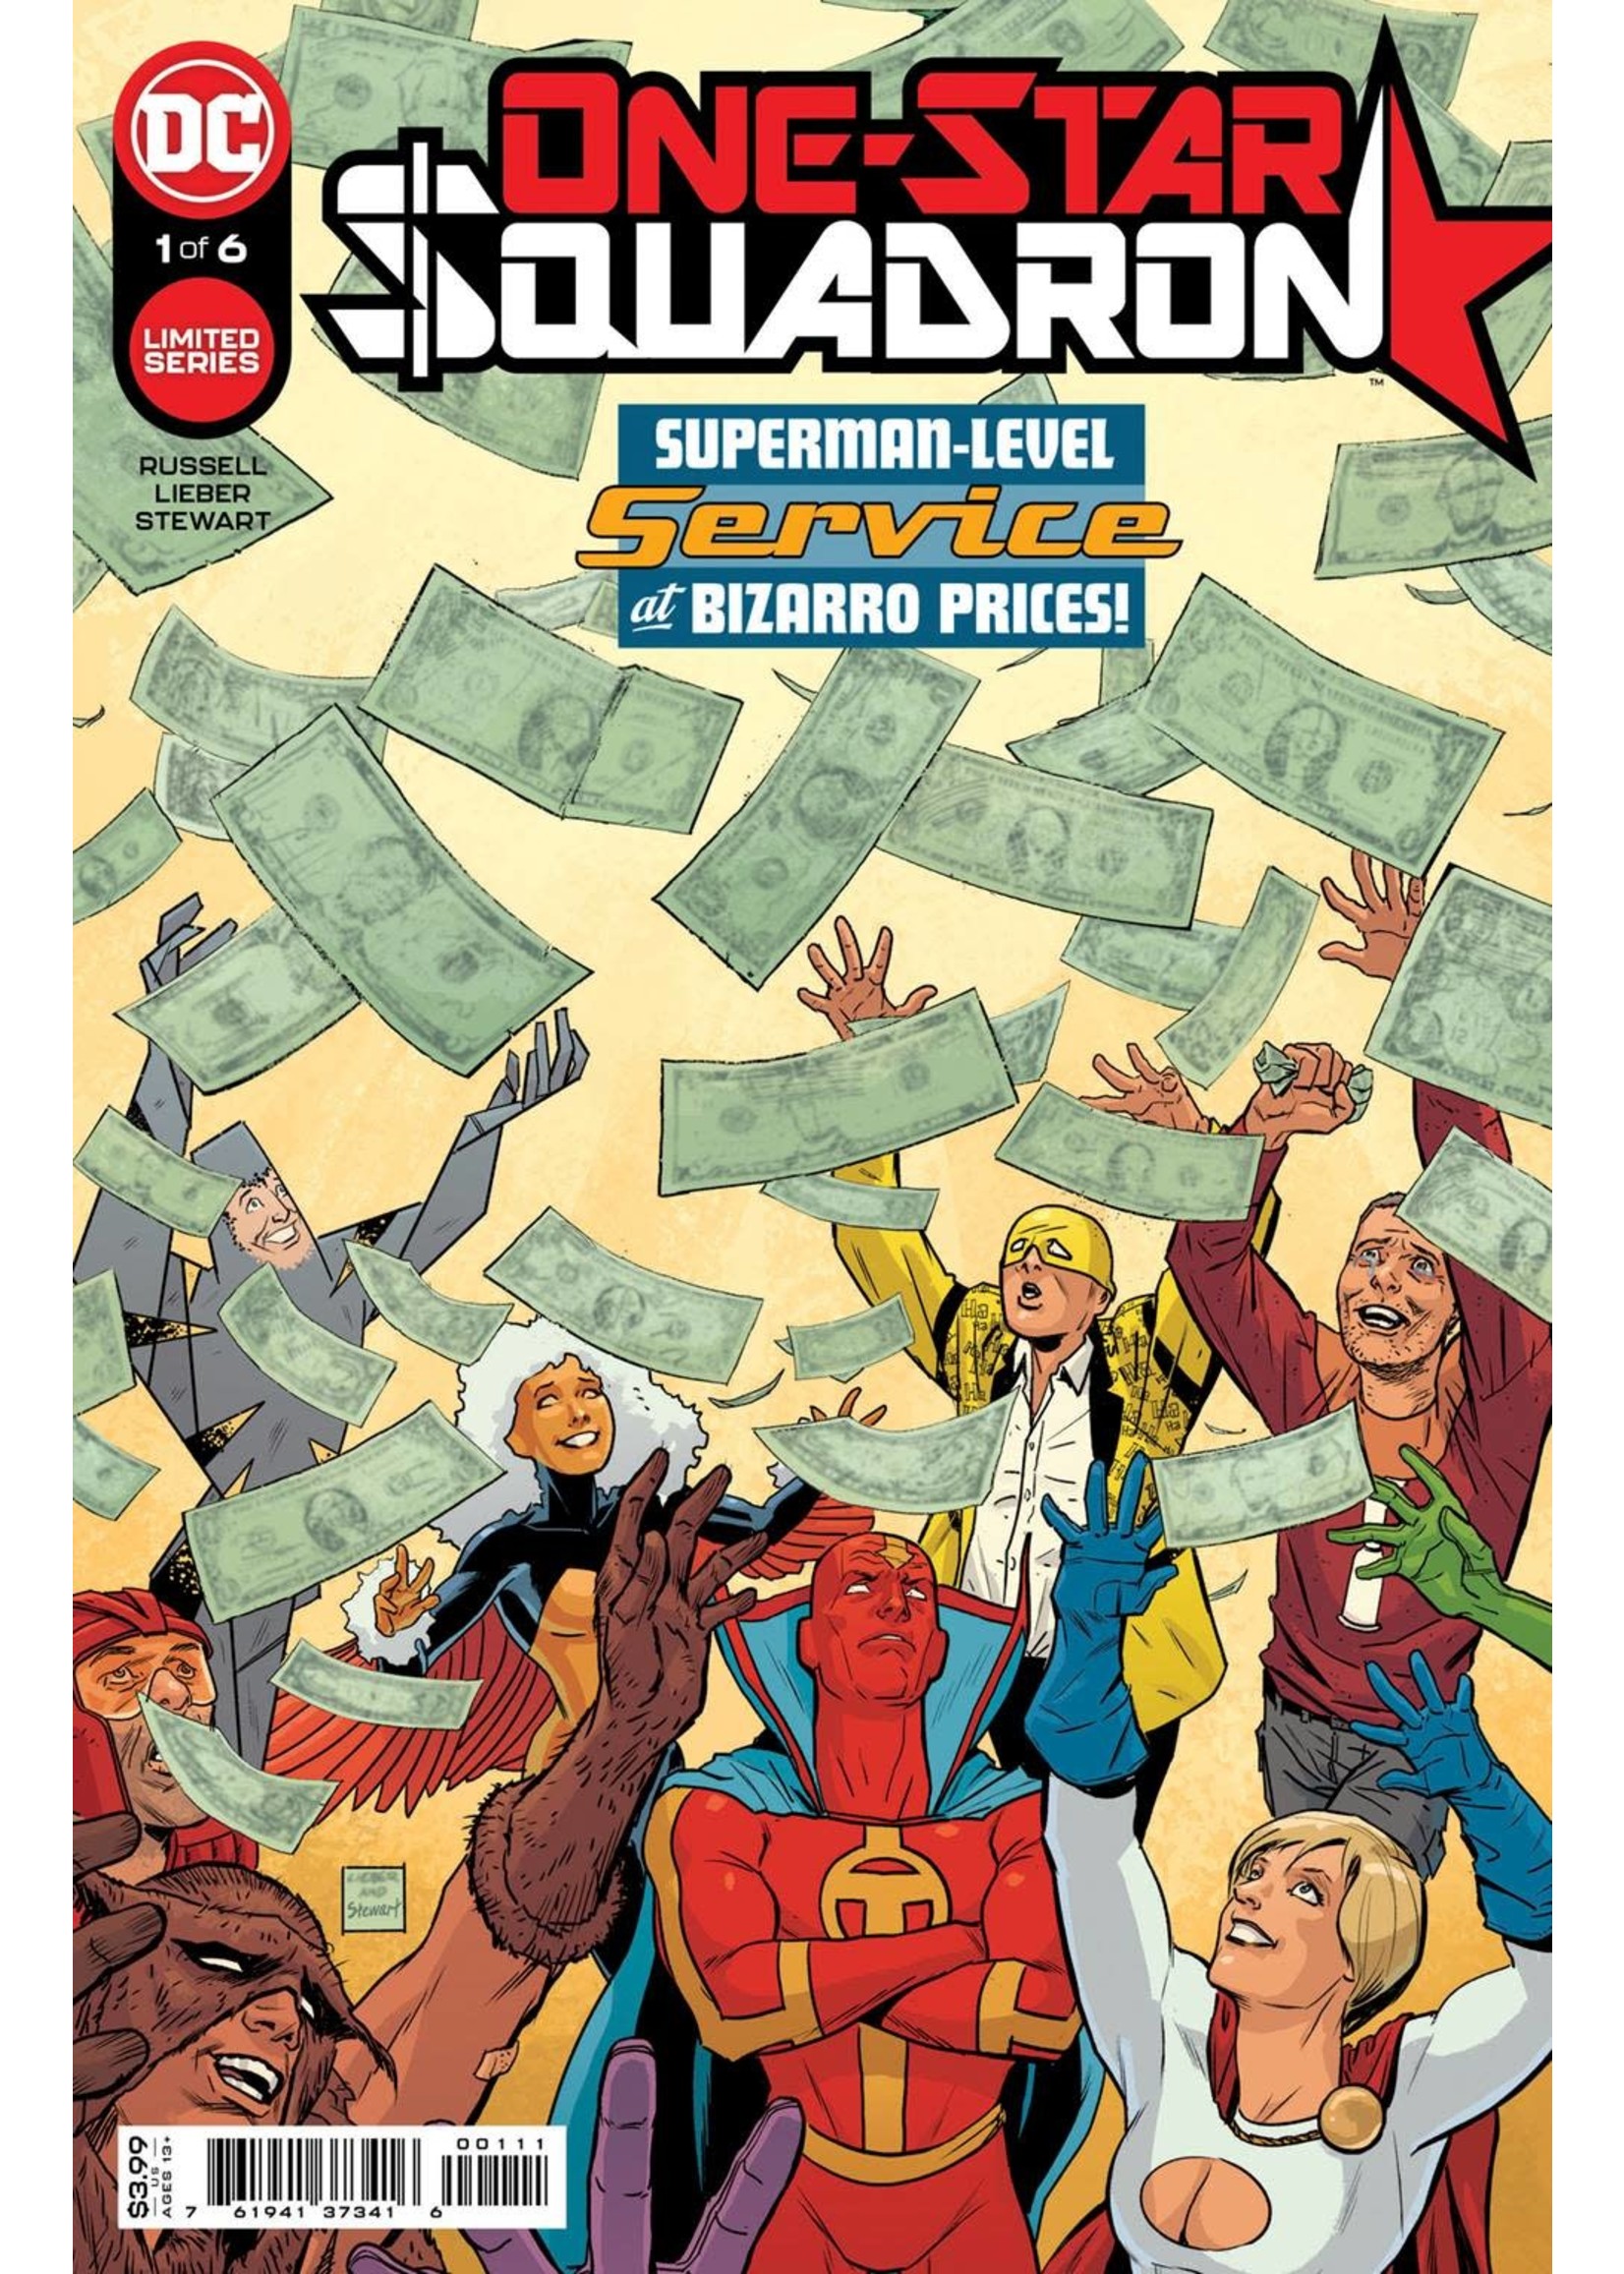 DC COMICS ONE-STAR SQUADRON #1 (OF 6) CVR A STEVE LIEBER